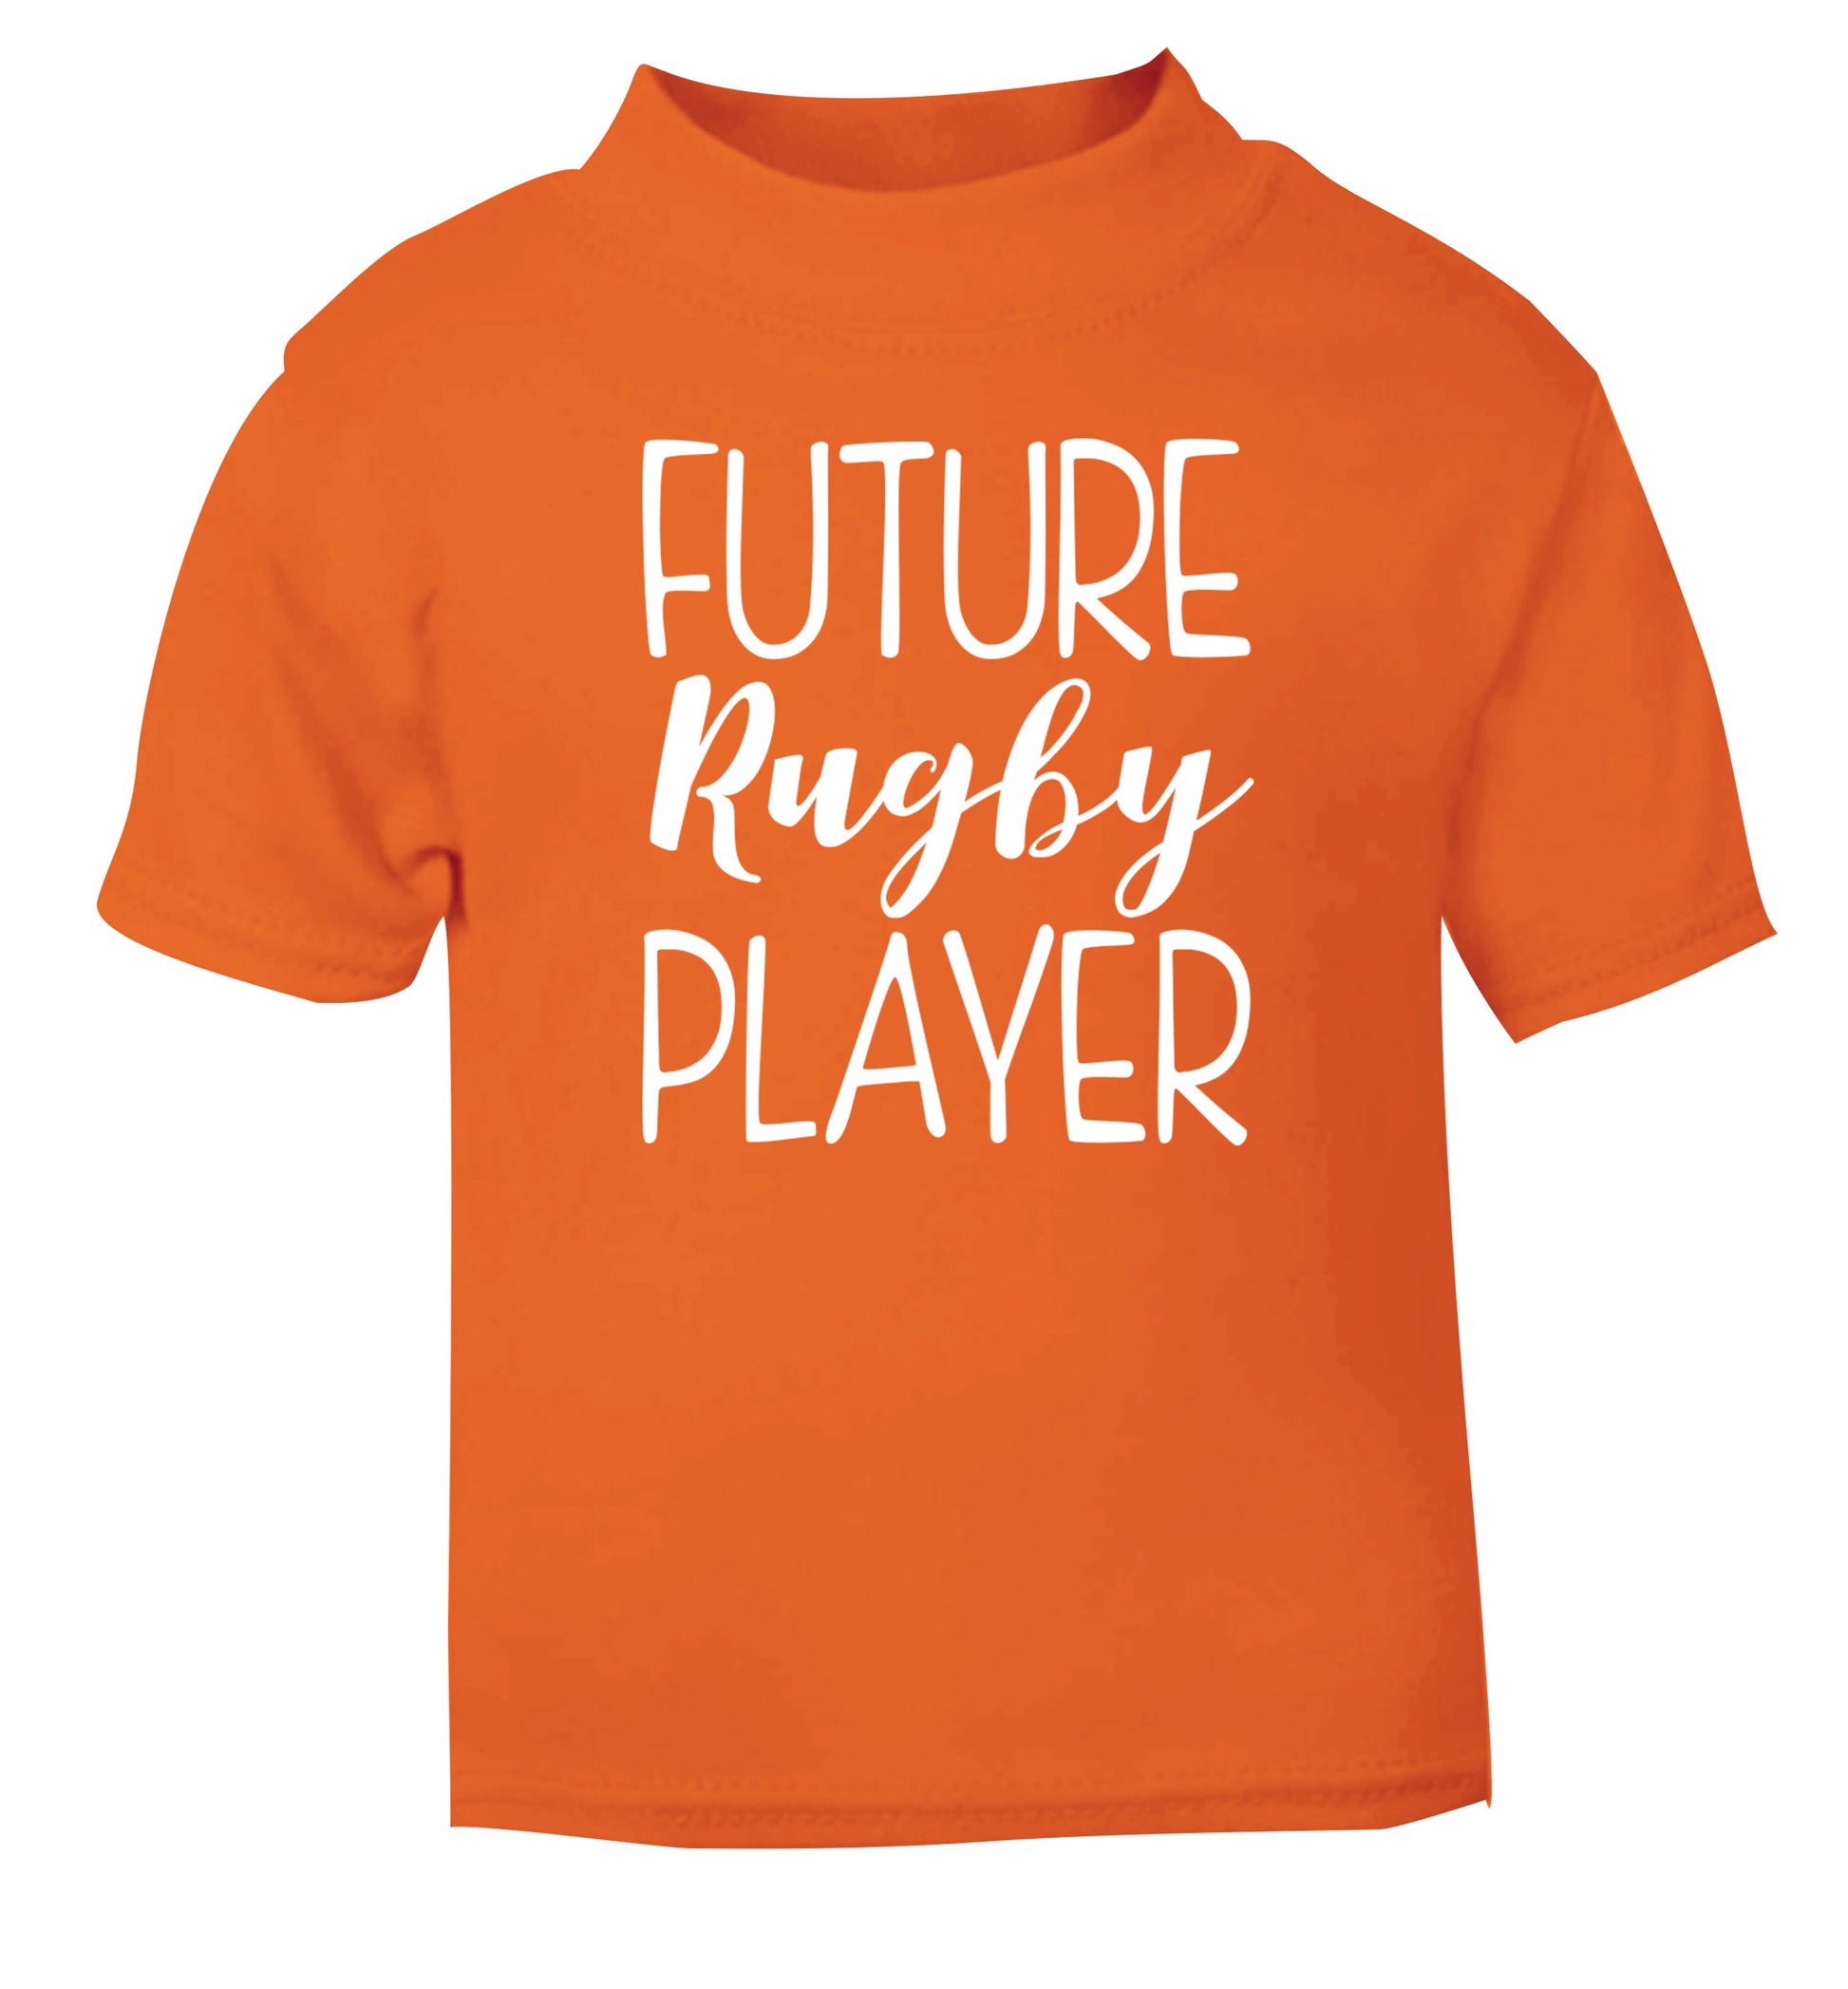 Future rugby player orange Baby Toddler Tshirt 2 Years